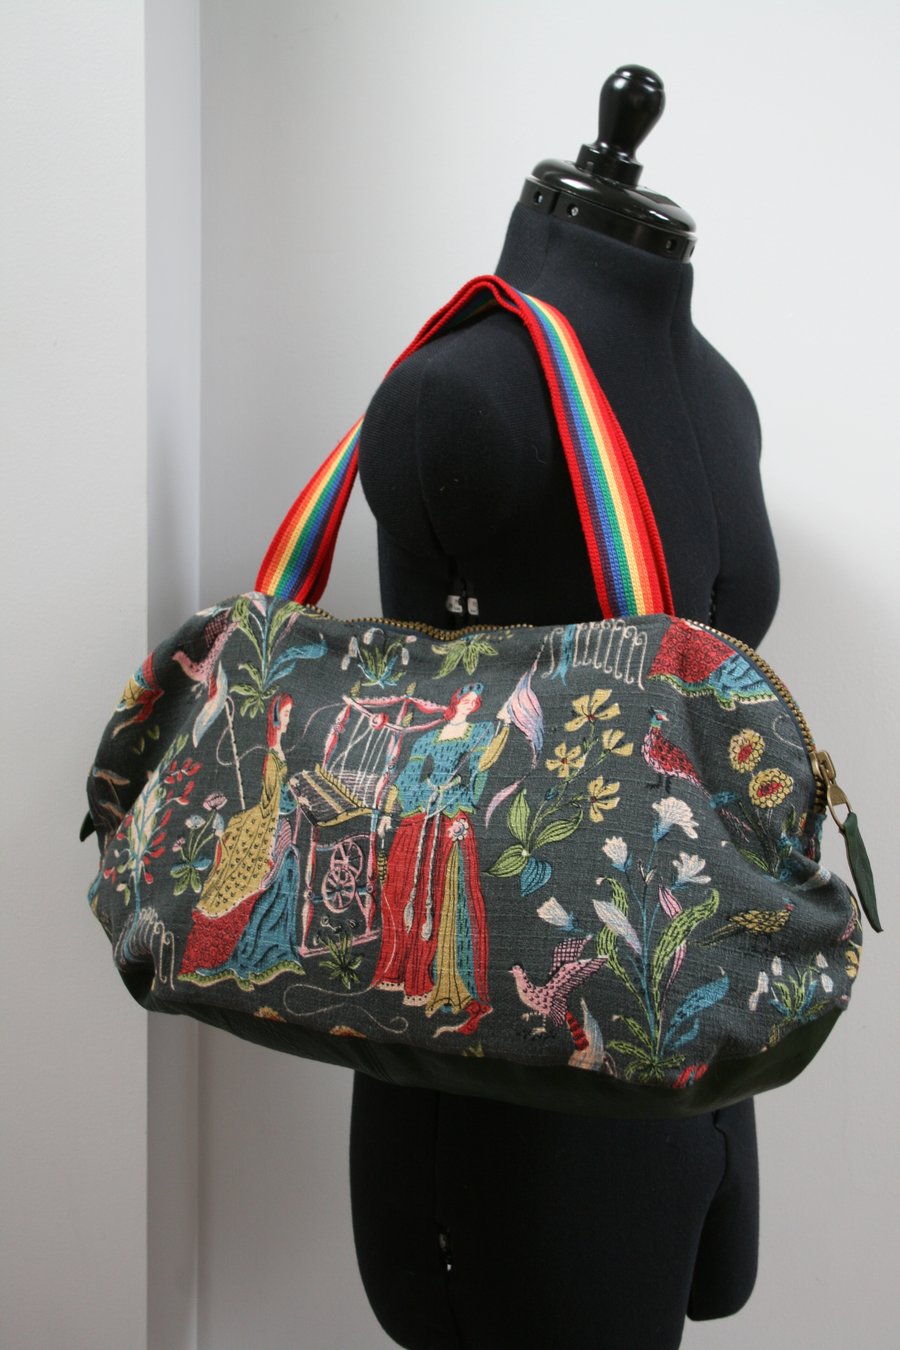 Overnight bag - upcycled and vintage weaving retro rainbow holdall tote, handbag